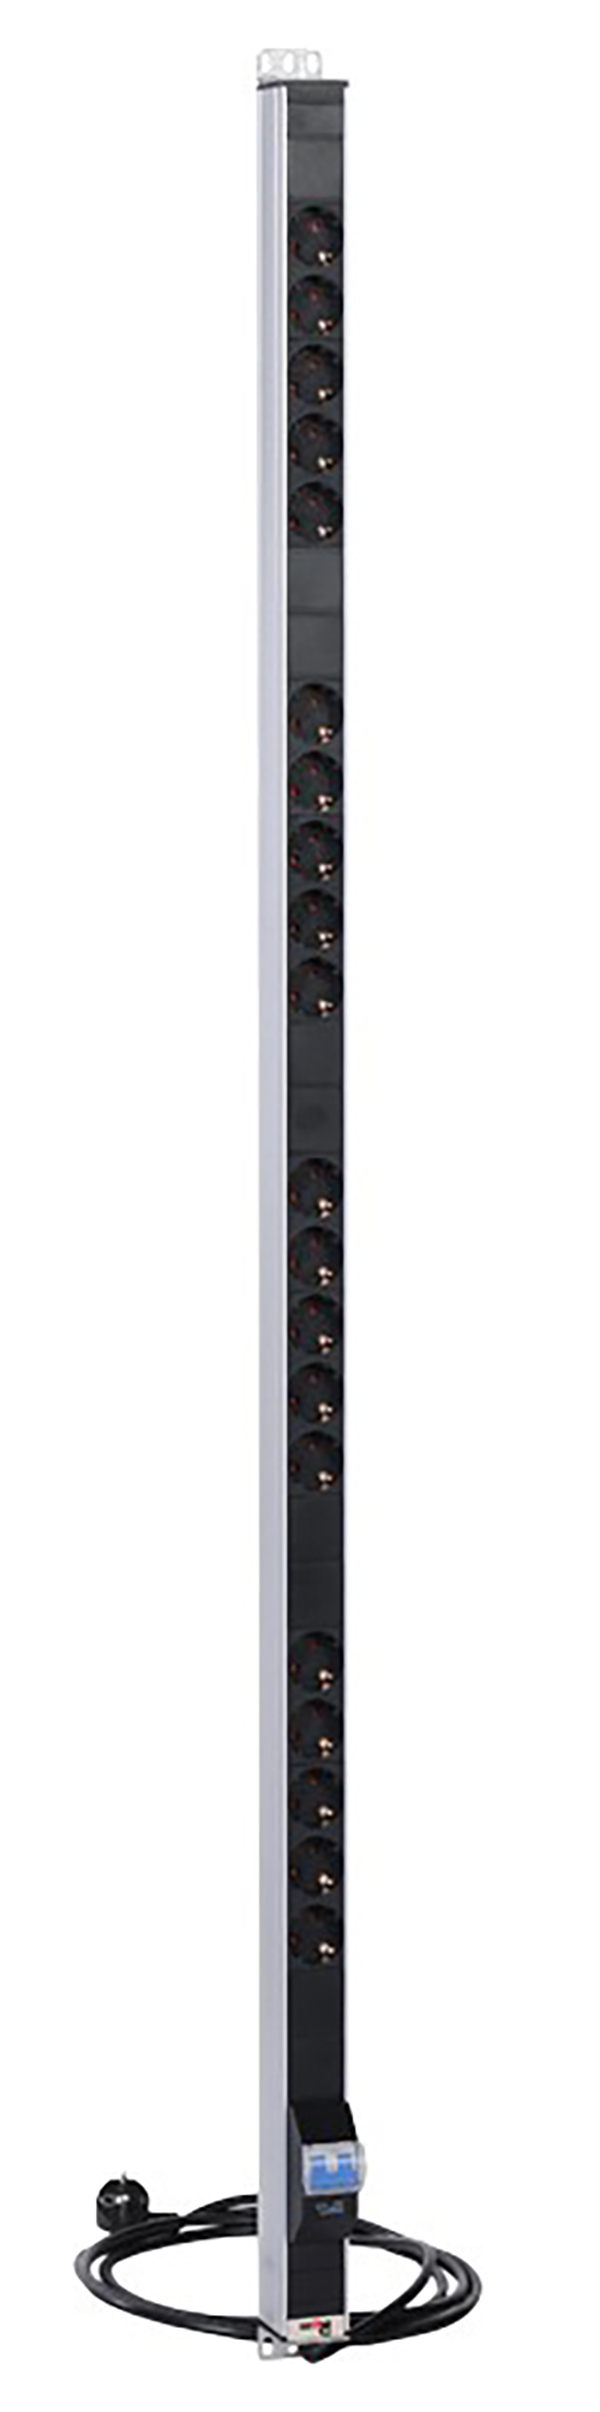 ЦМО Вертикальный блок розеток Rem-16 с фил. и инд., 20 Shuko, 16A, алюм., 33-38U, шнур 3 м